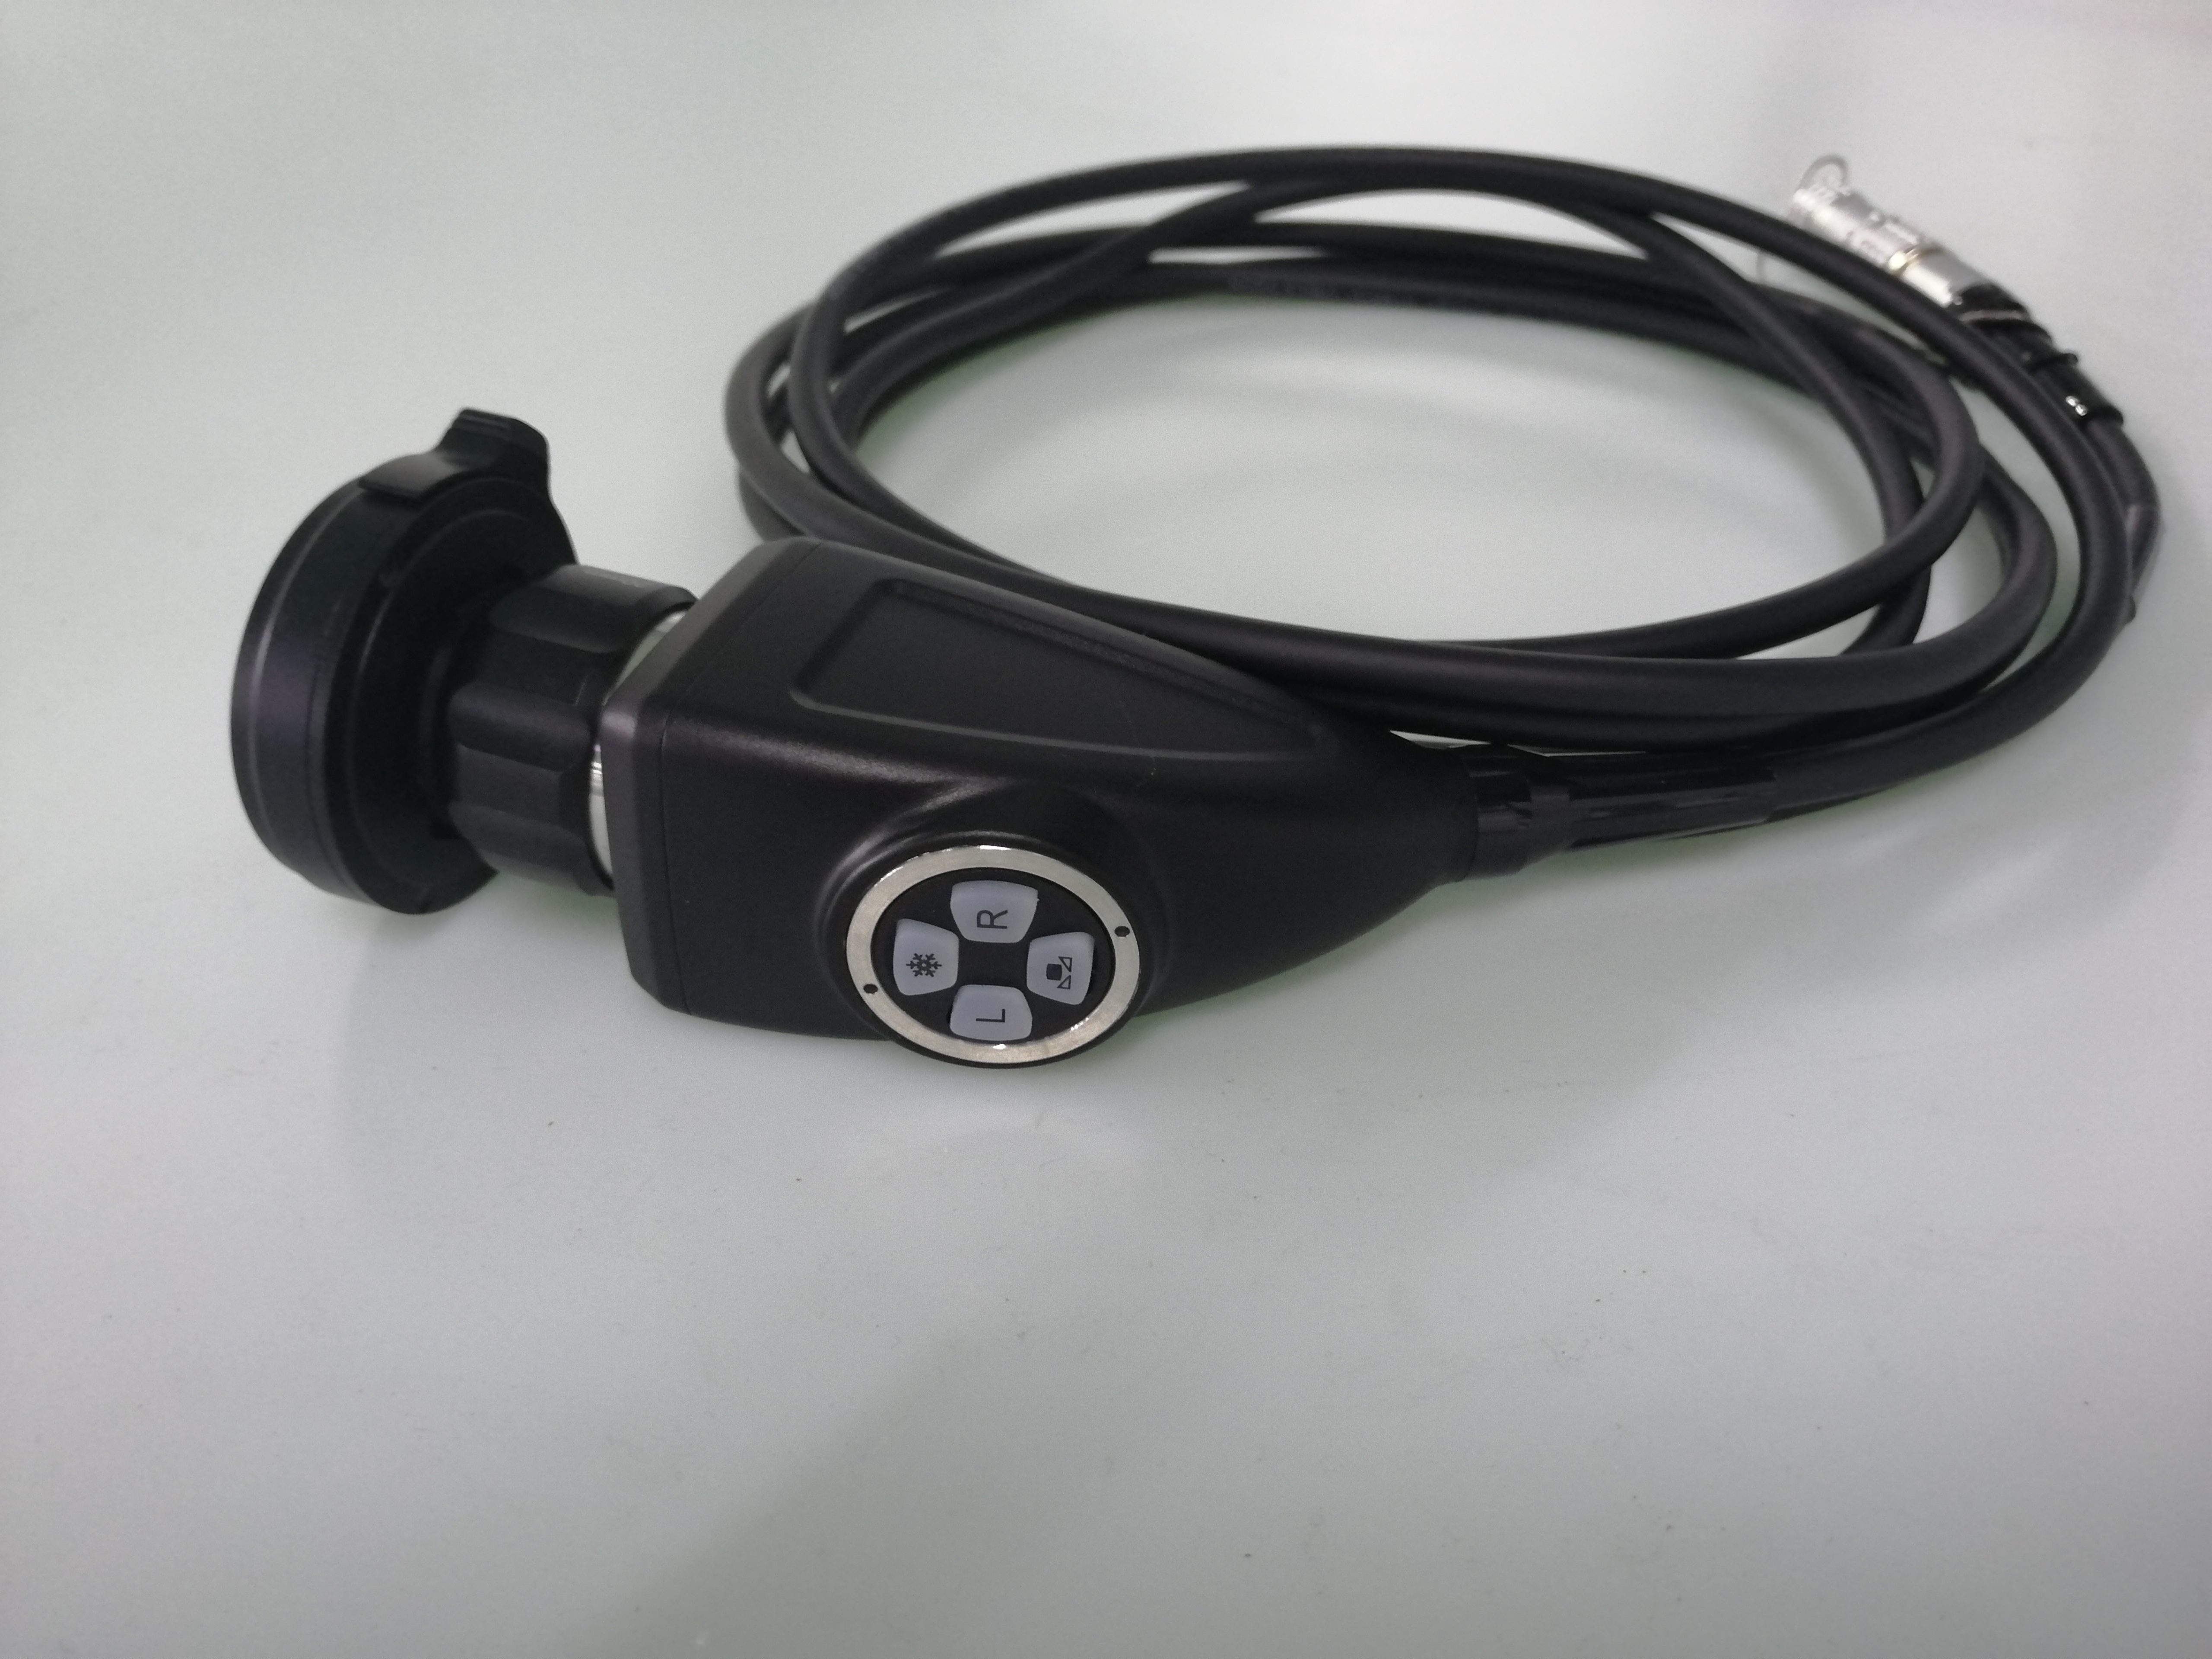 Kamerakopf für Full HD Endoskopkamera